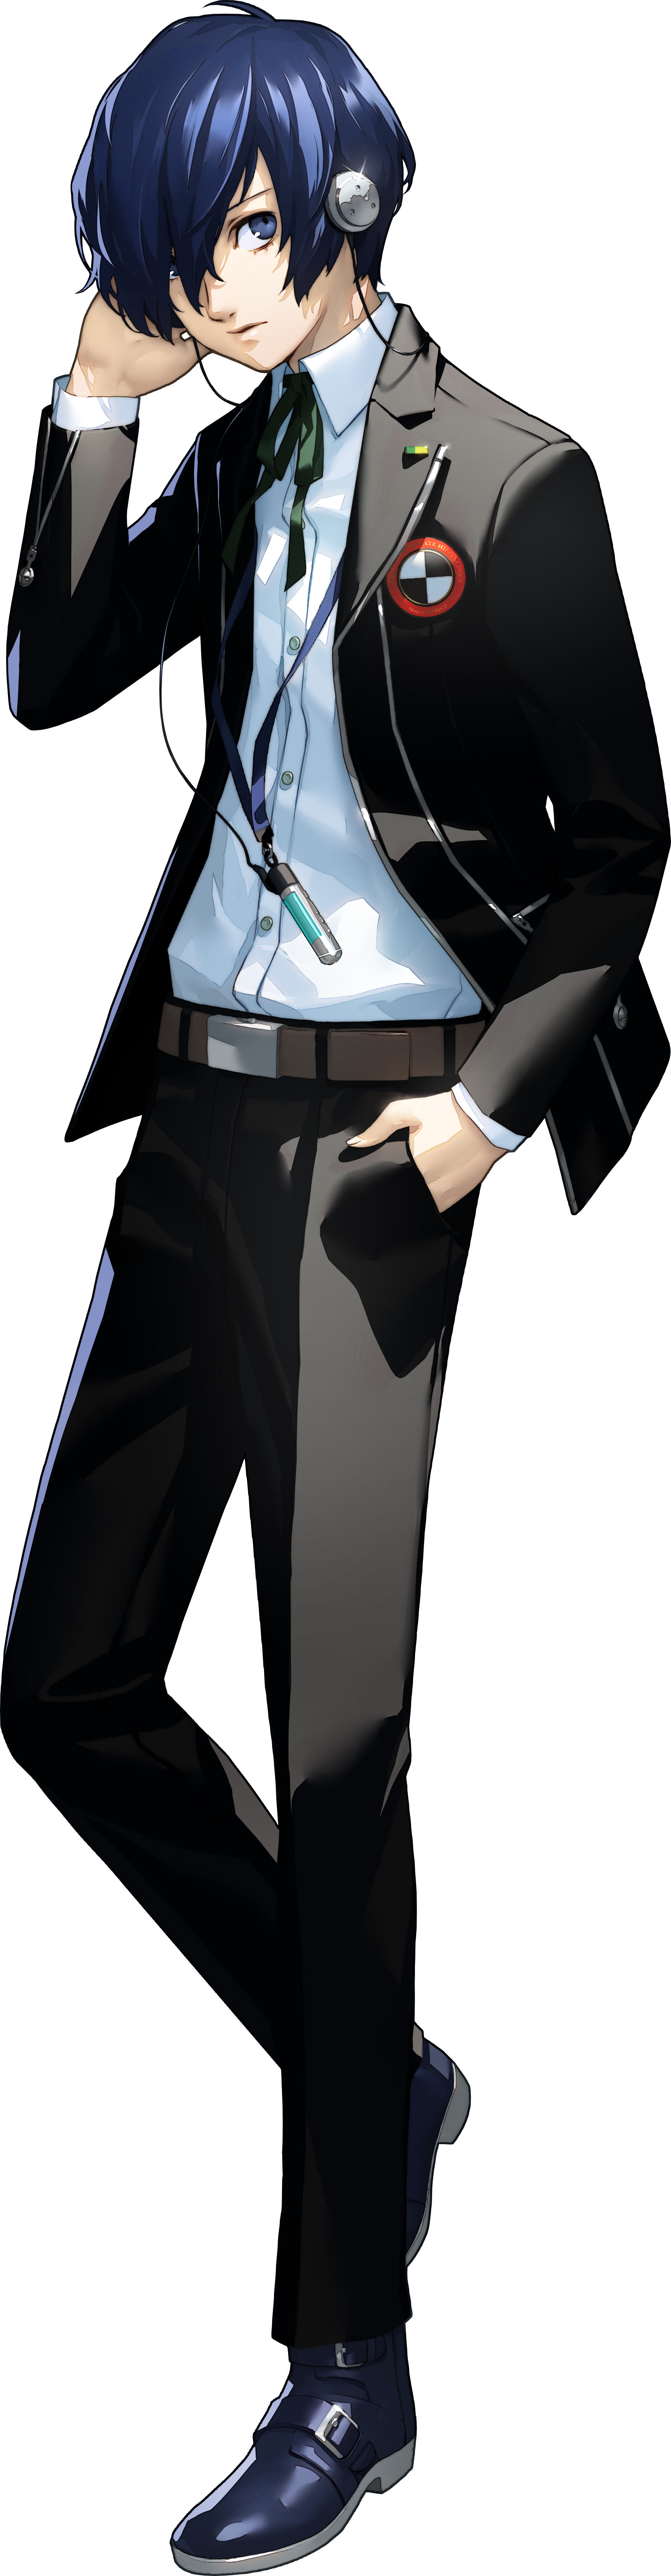 Protagonist (Persona 3) - Wikipedia